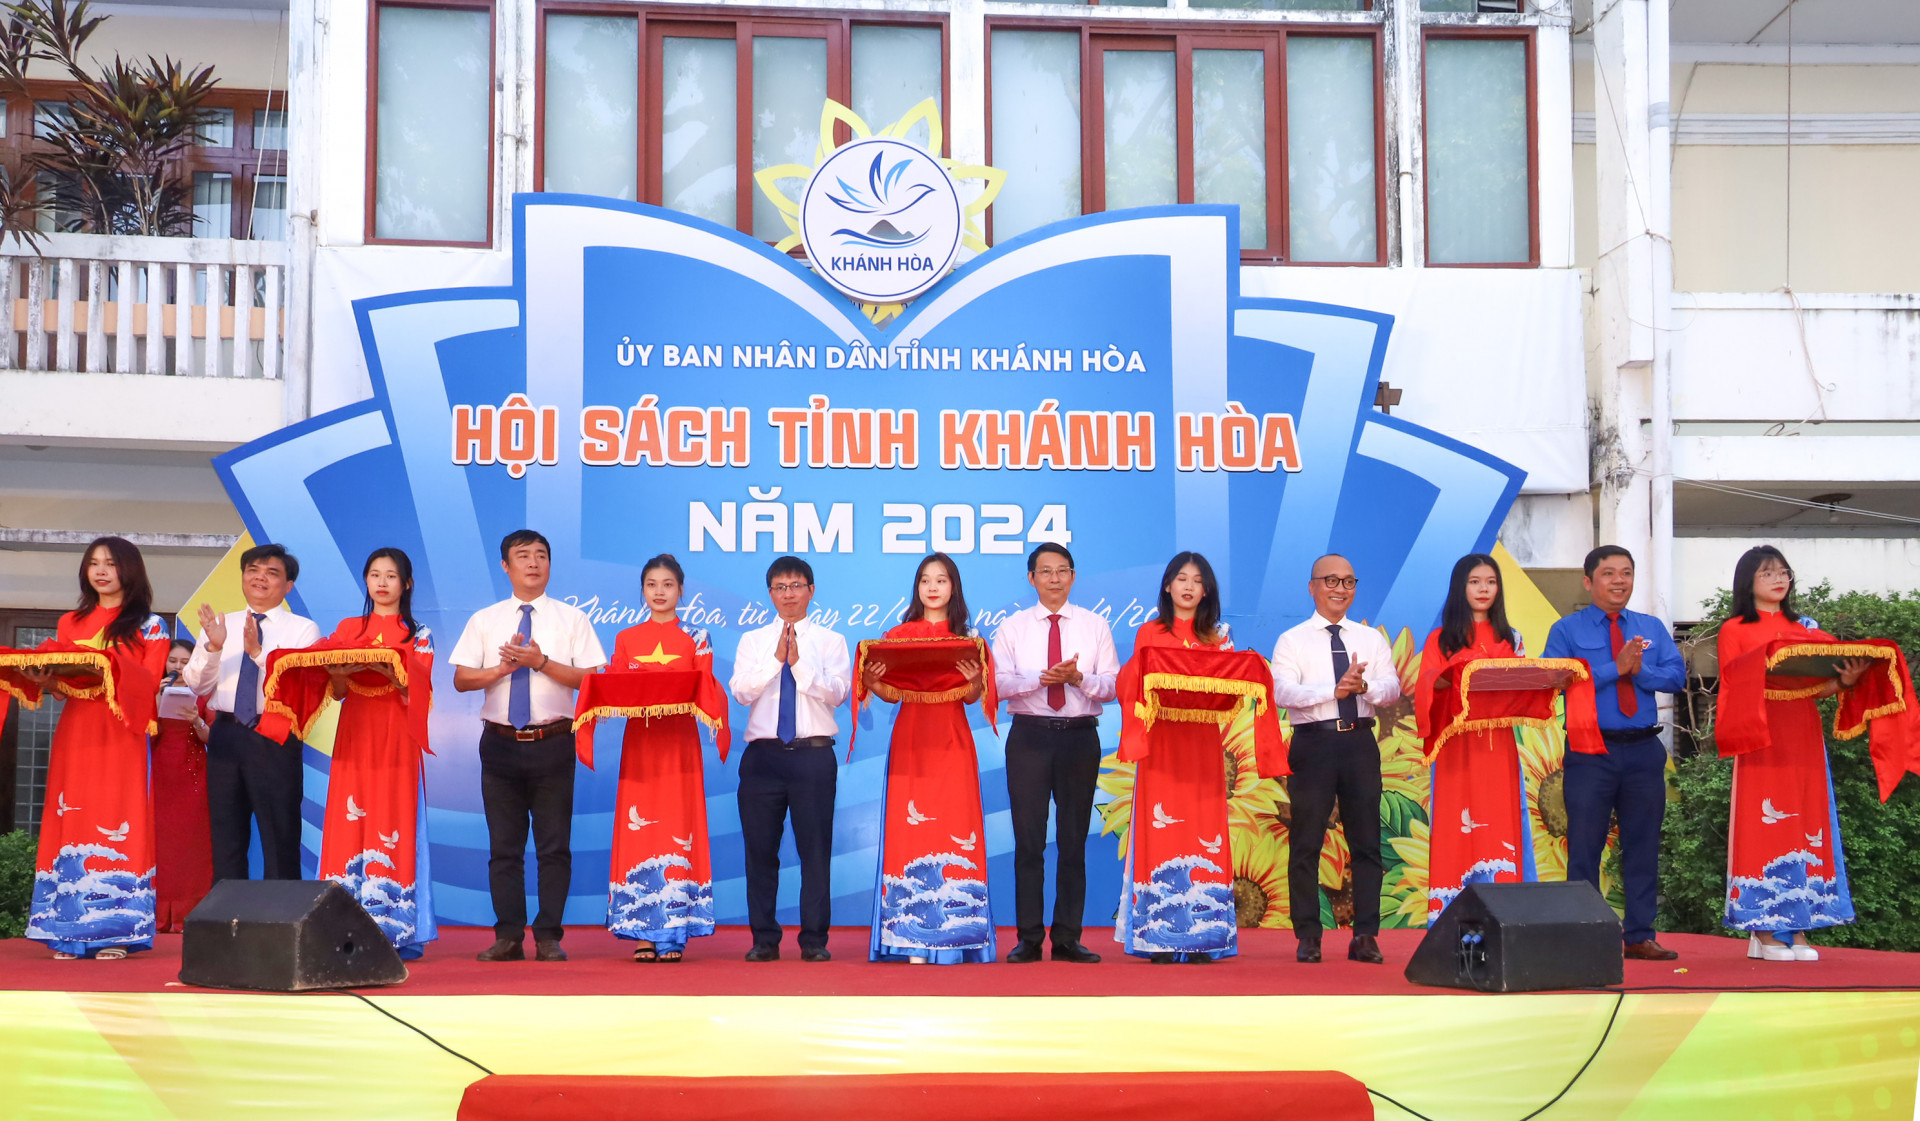 The representatives cutting ribbon to open Khanh Hoa book fair 2024

